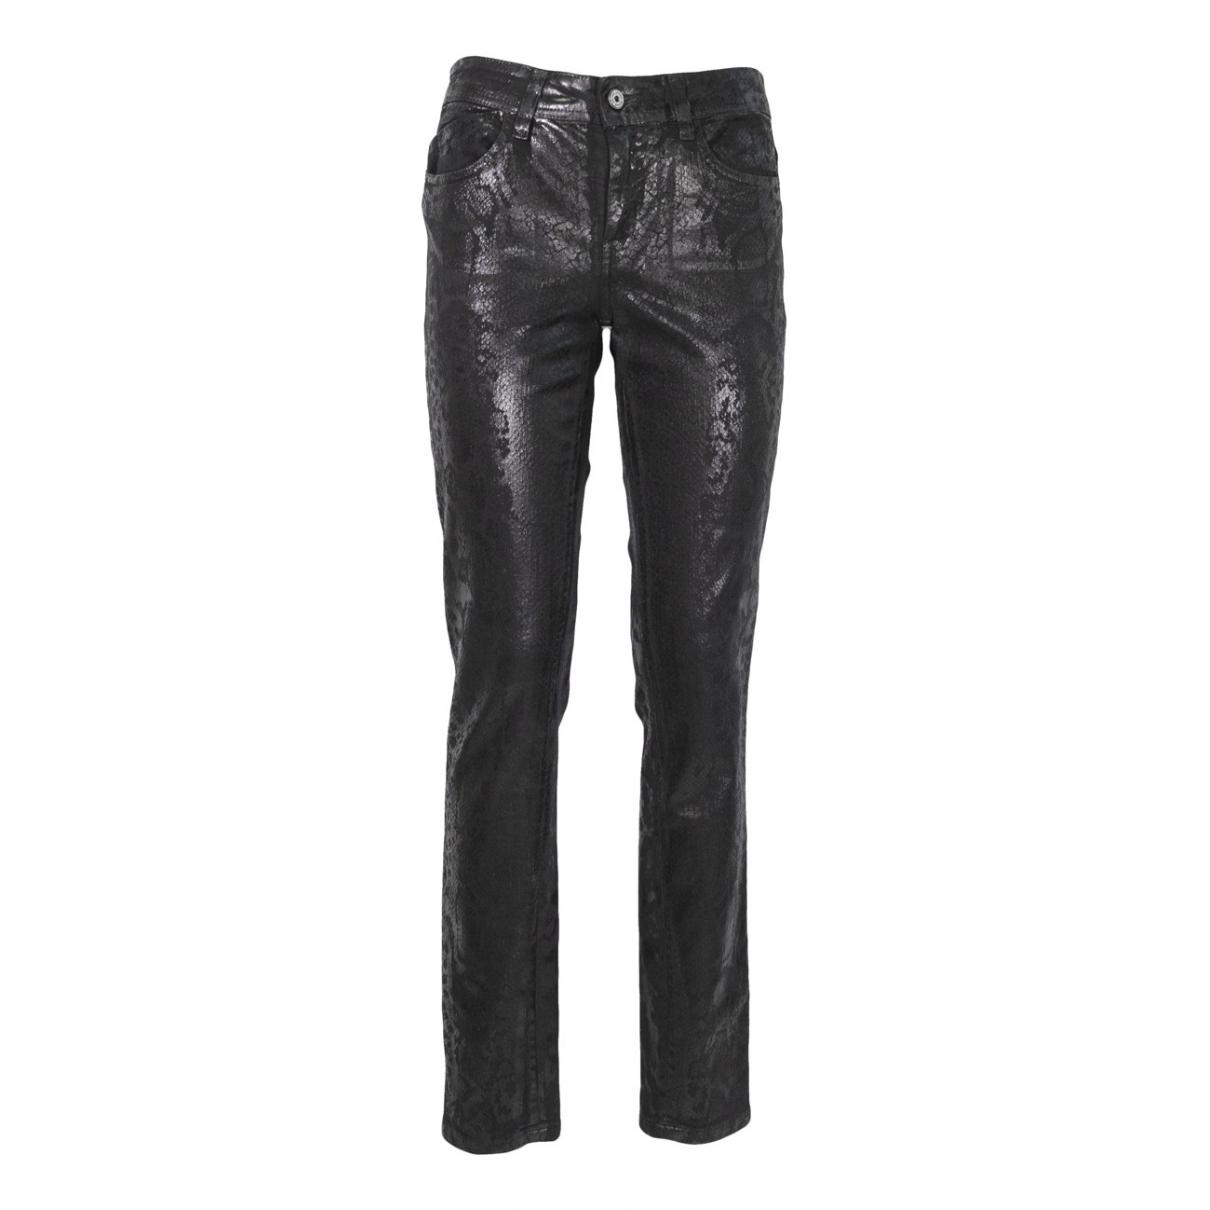 Roberto Cavalli Cotton Straight Pants in Black - Lyst